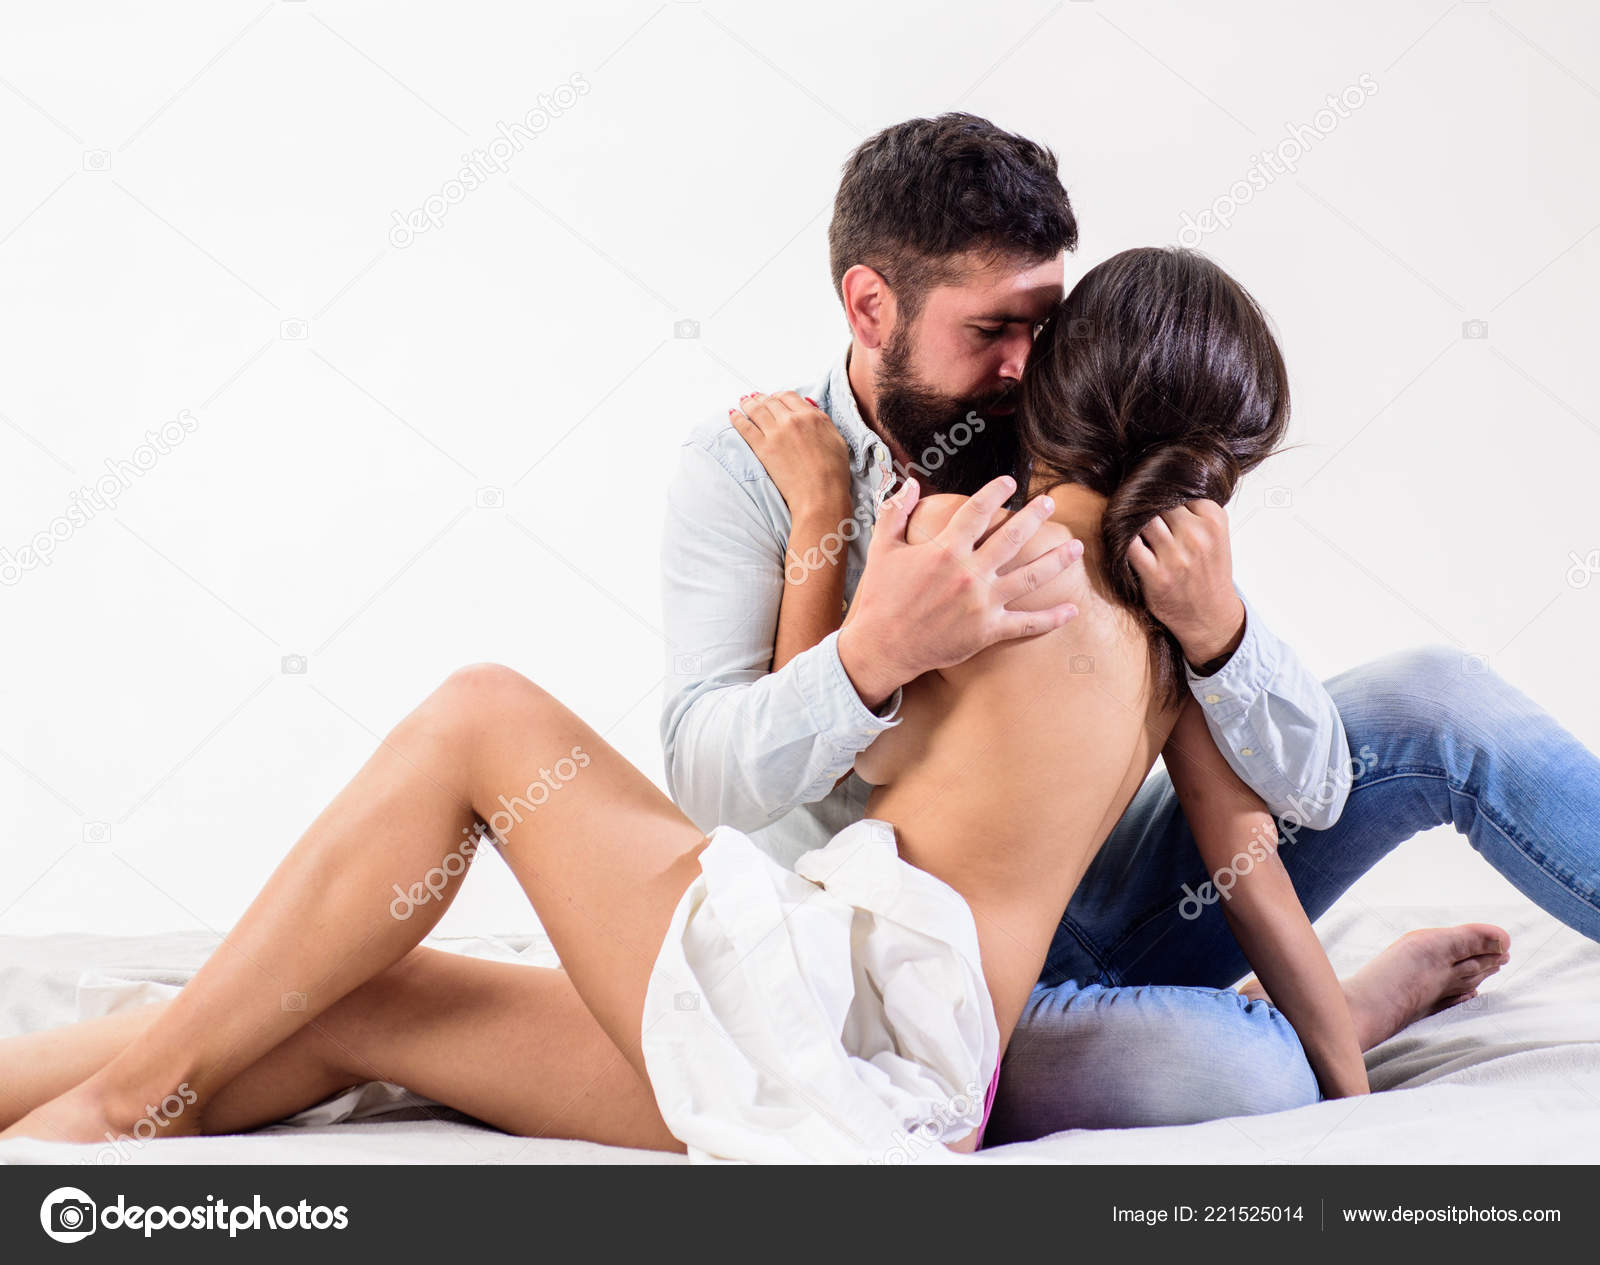 Nude girls masturbating each other